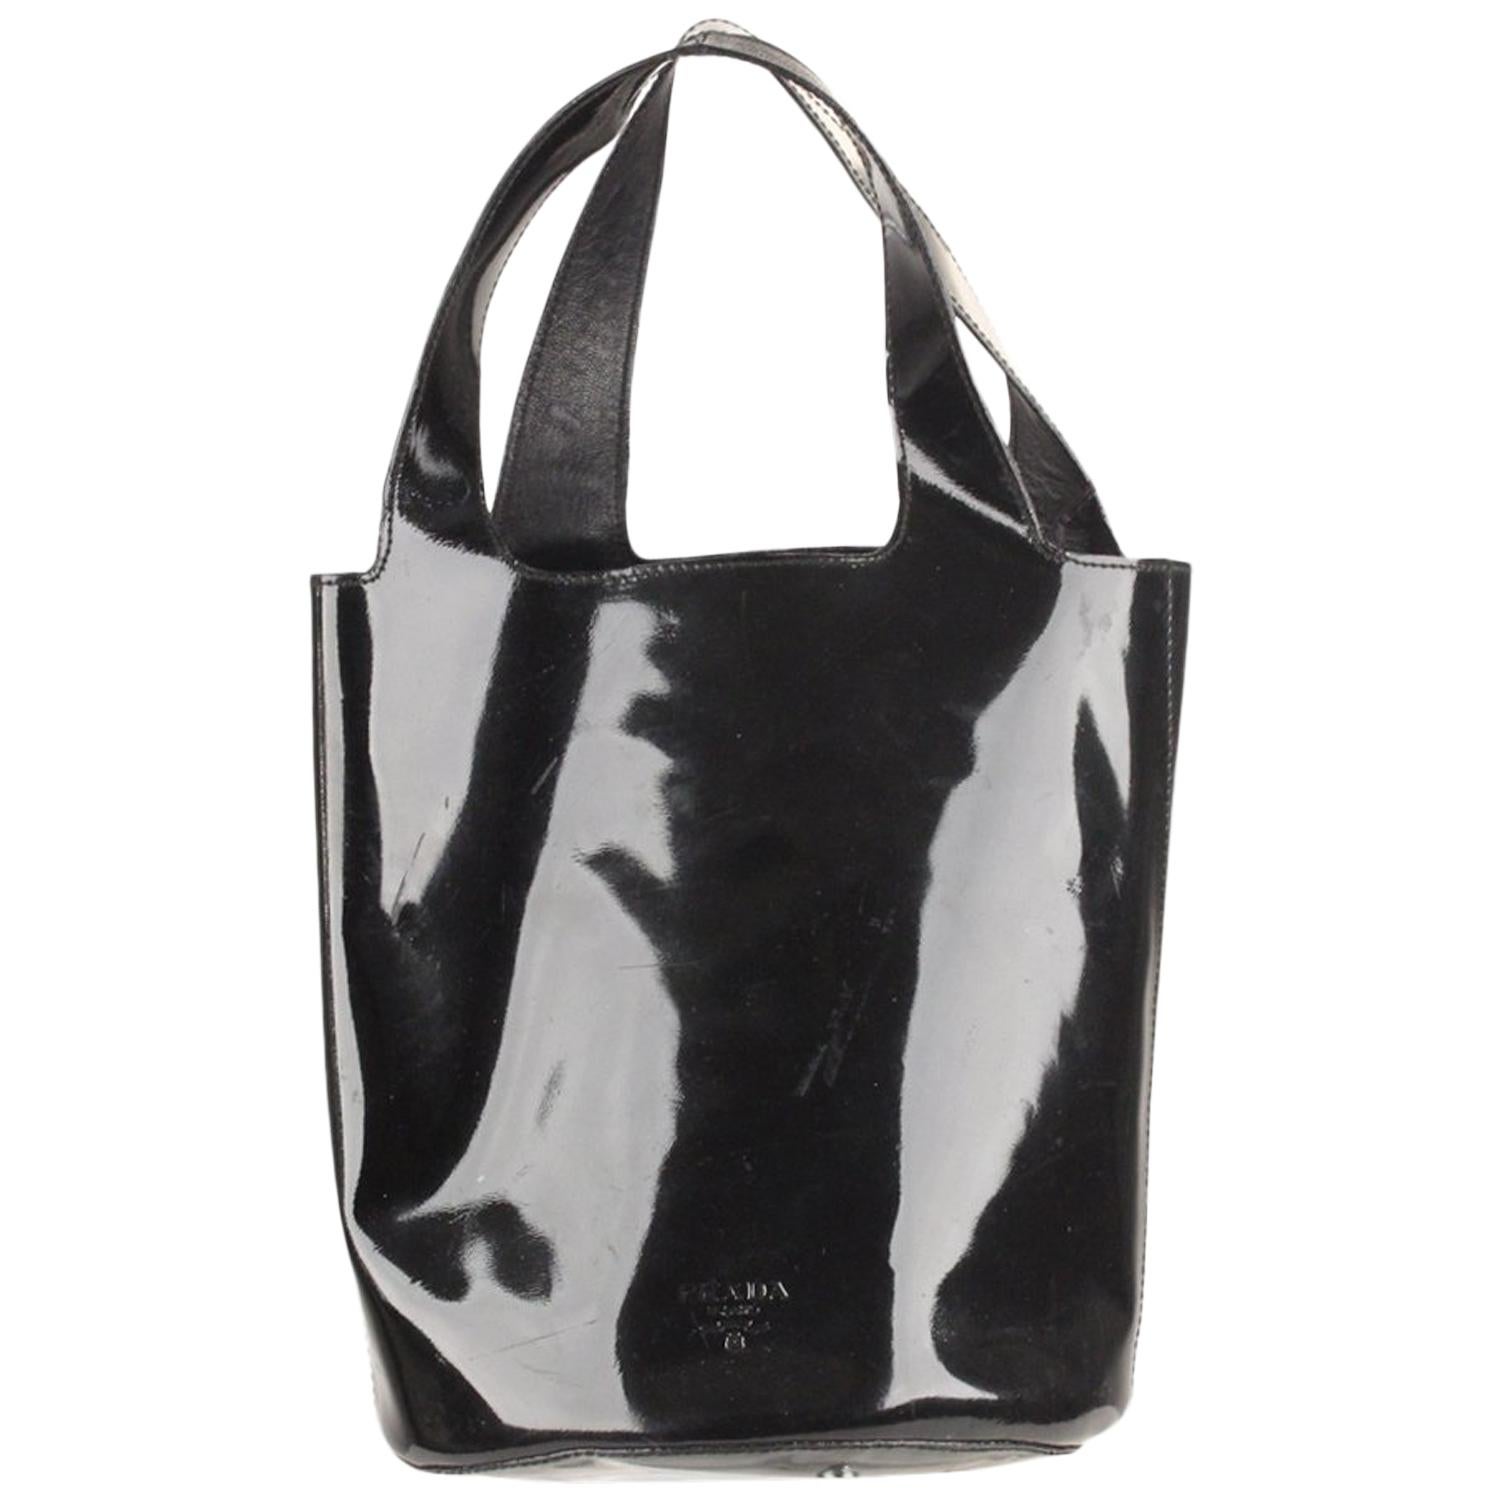 Prada Black Patent Leather Bucket Bag Tote Handbag